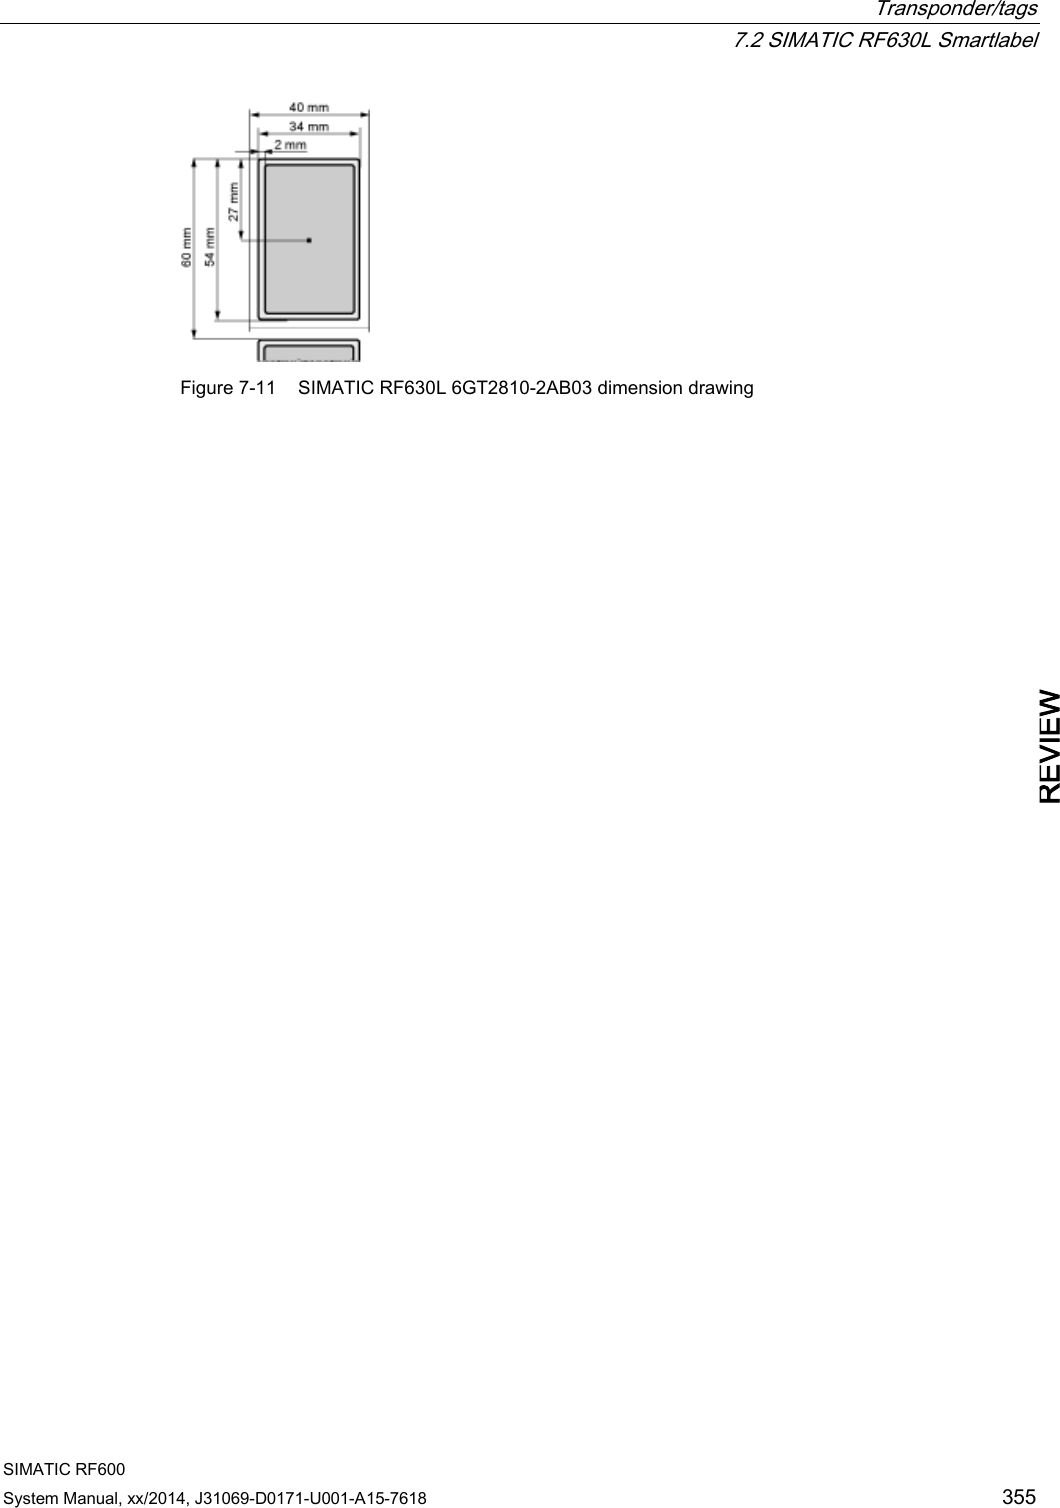  Transponder/tags  7.2 SIMATIC RF630L Smartlabel SIMATIC RF600 System Manual, xx/2014, J31069-D0171-U001-A15-7618 355 REVIEW  Figure 7-11  SIMATIC RF630L 6GT2810-2AB03 dimension drawing 